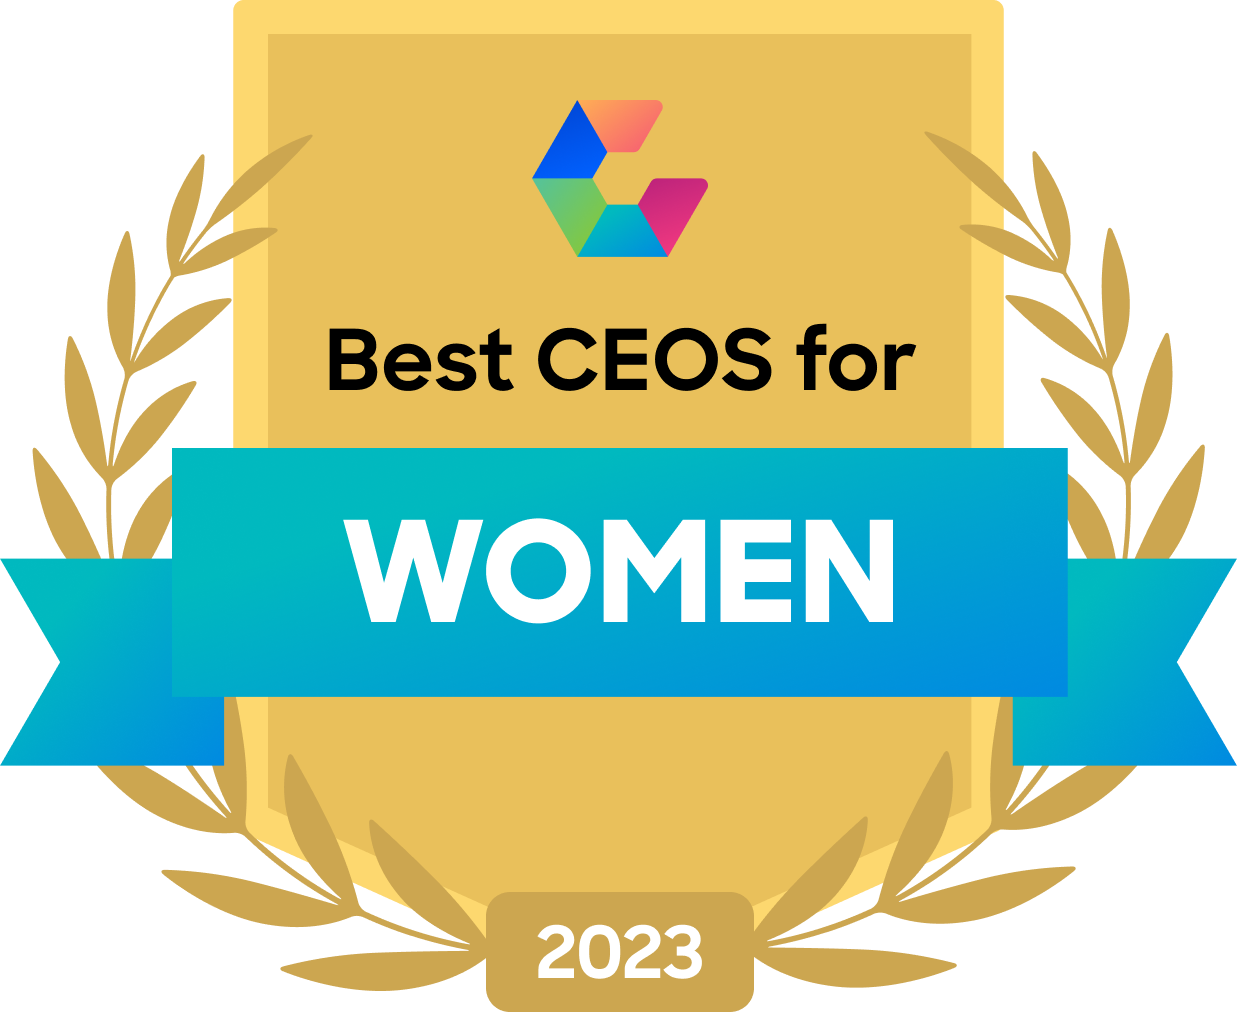 Best CEO for Women 2023